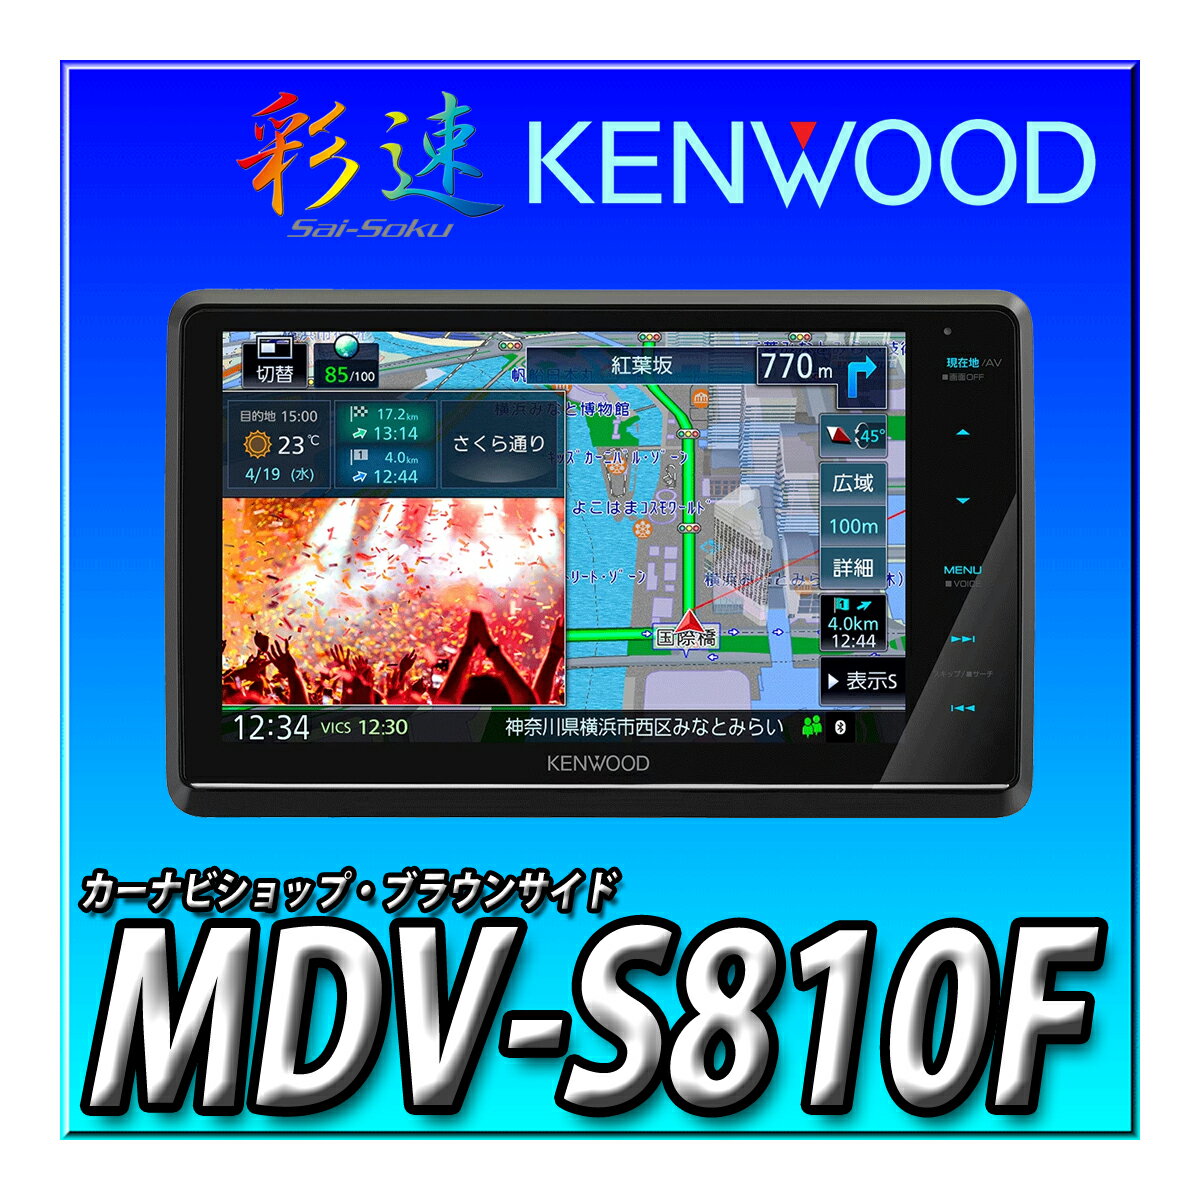 MDV-S810F 8インチ フローティングモデル ケンウッド カーナビ 彩速ナビ 8インチ フローティングモデル..